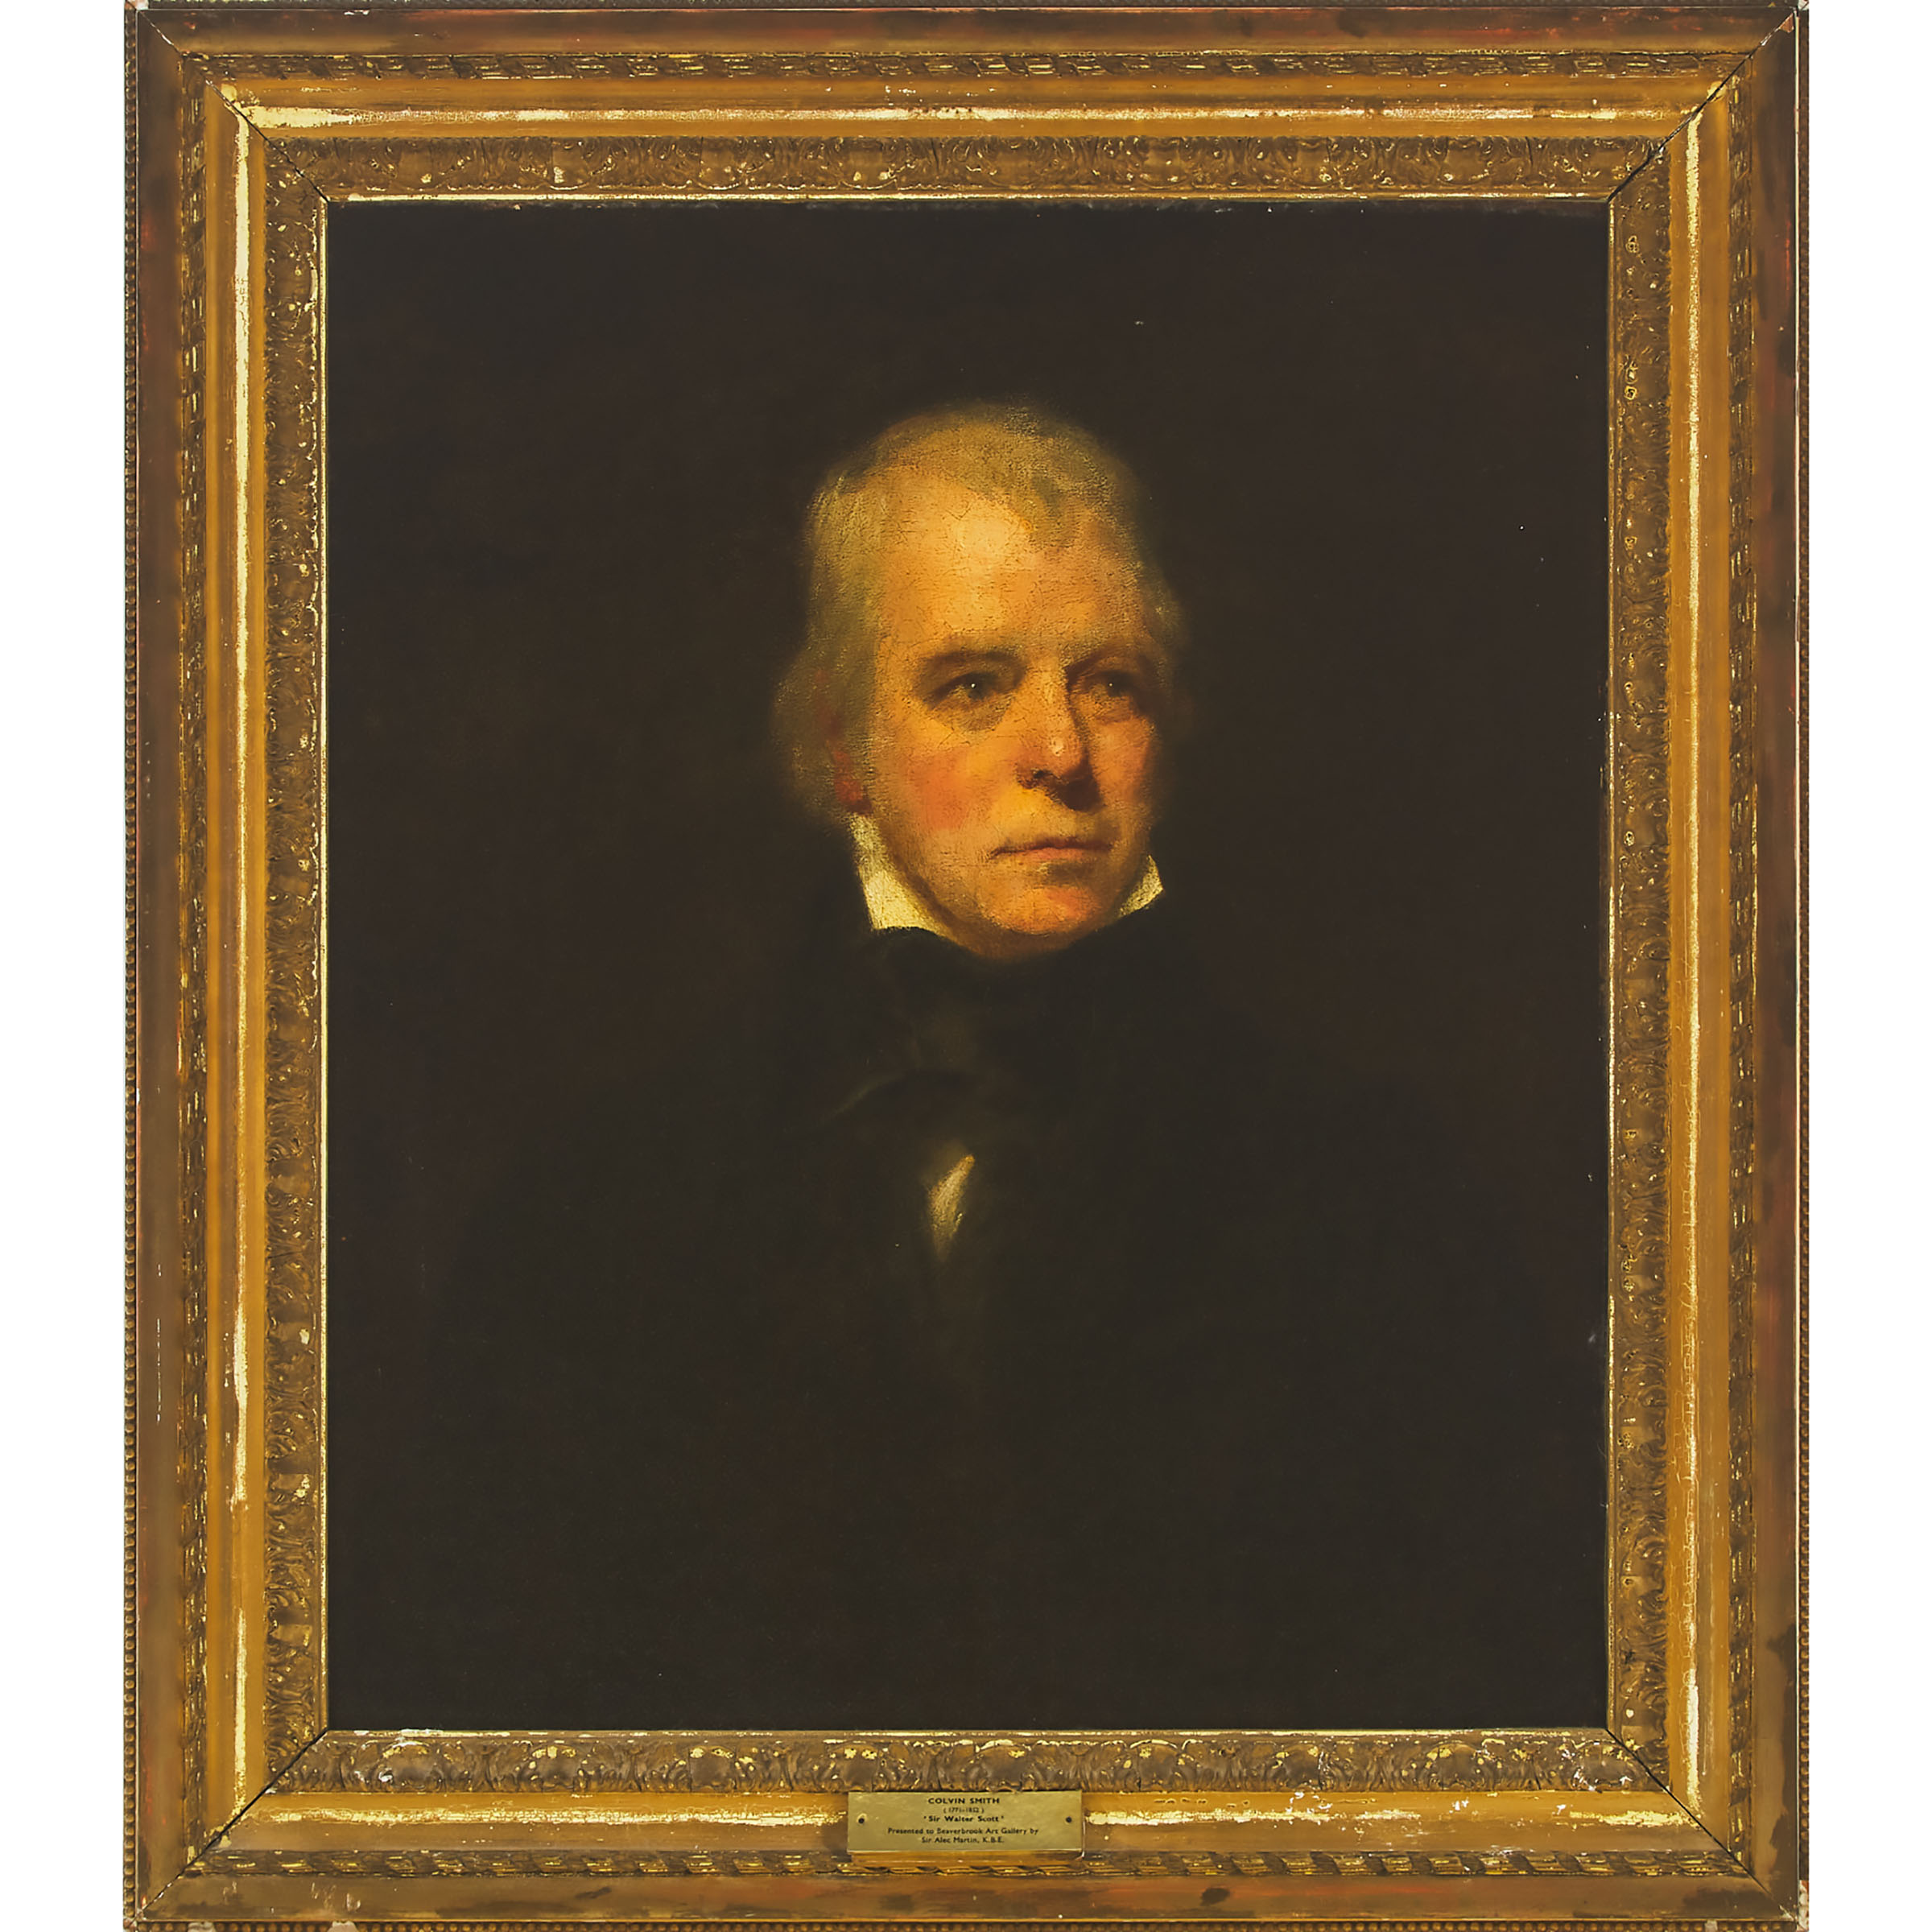 Colvin Smith (1795-1875)